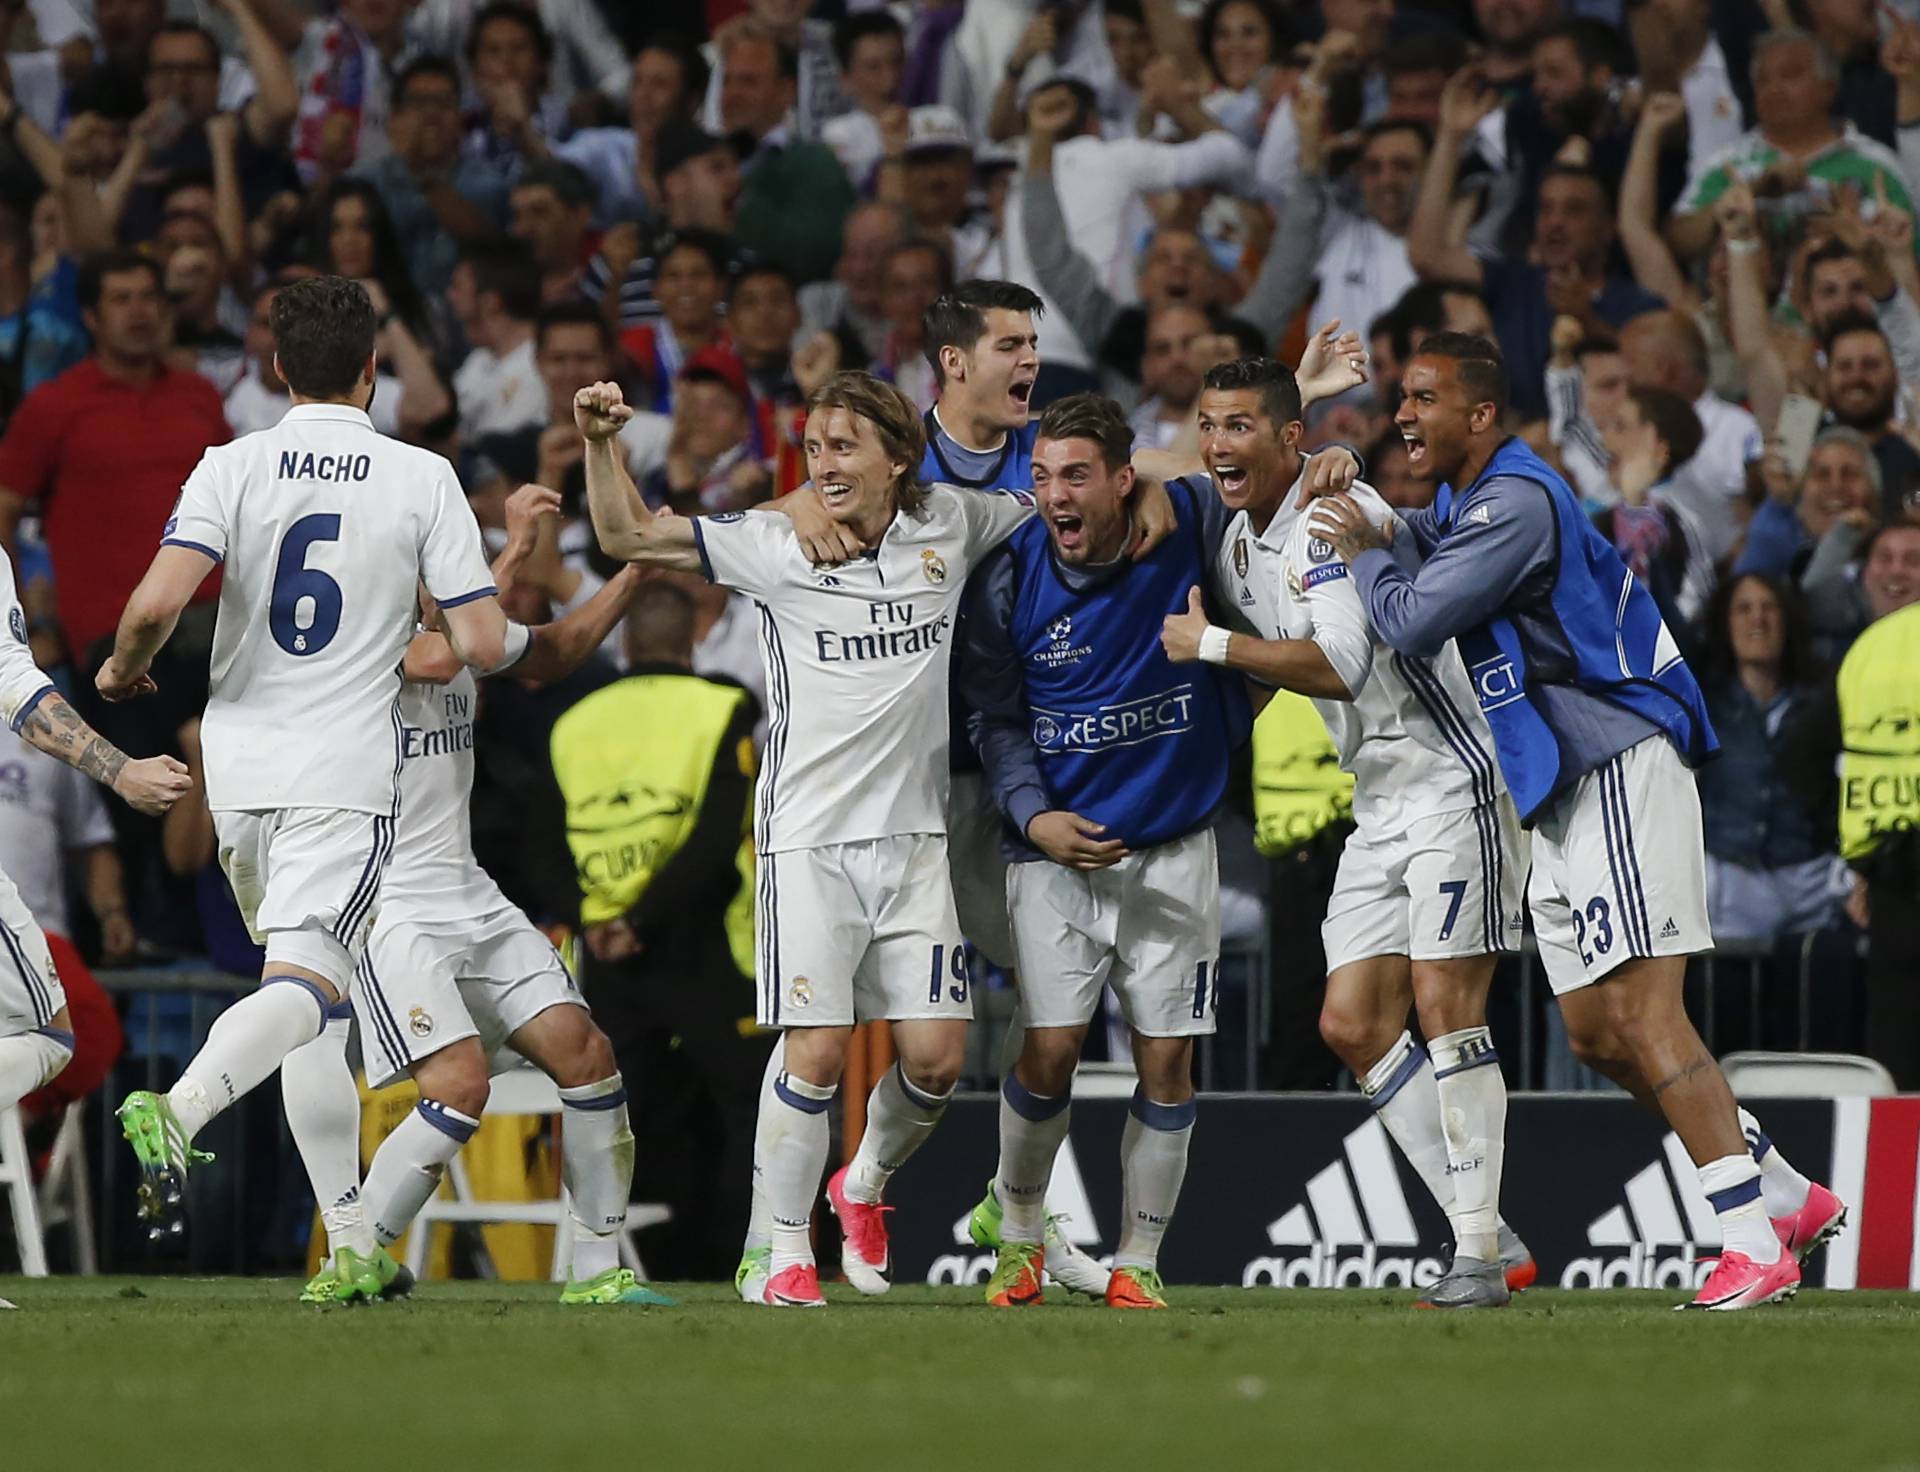 Real Madrid's Cristiano Ronaldo celebrates scoring their second goal with teammates